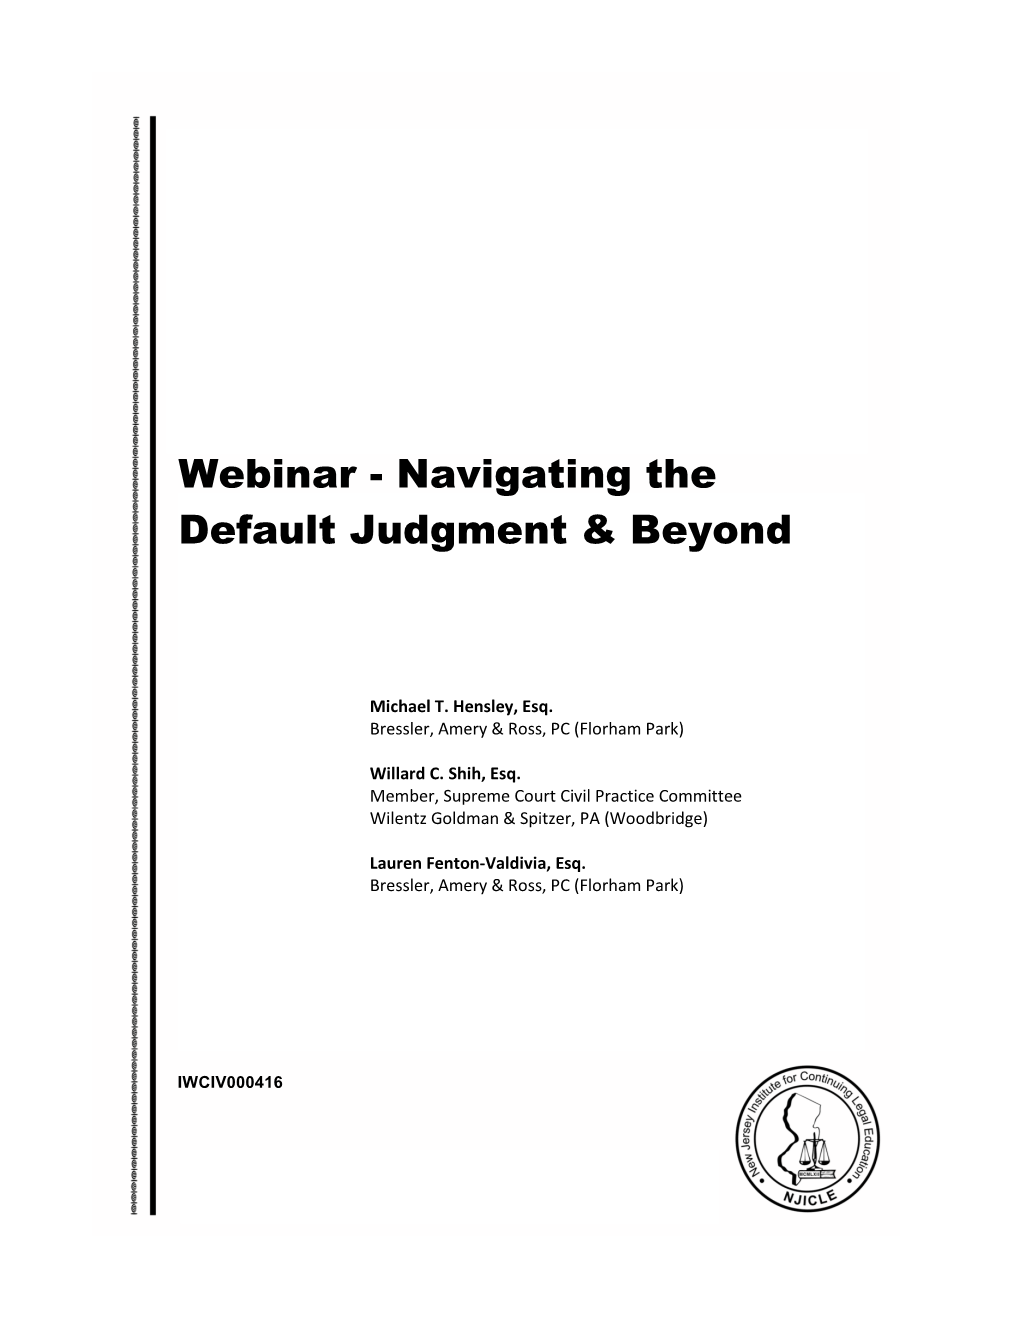 Webinar - Navigating the Default Judgment & Beyond